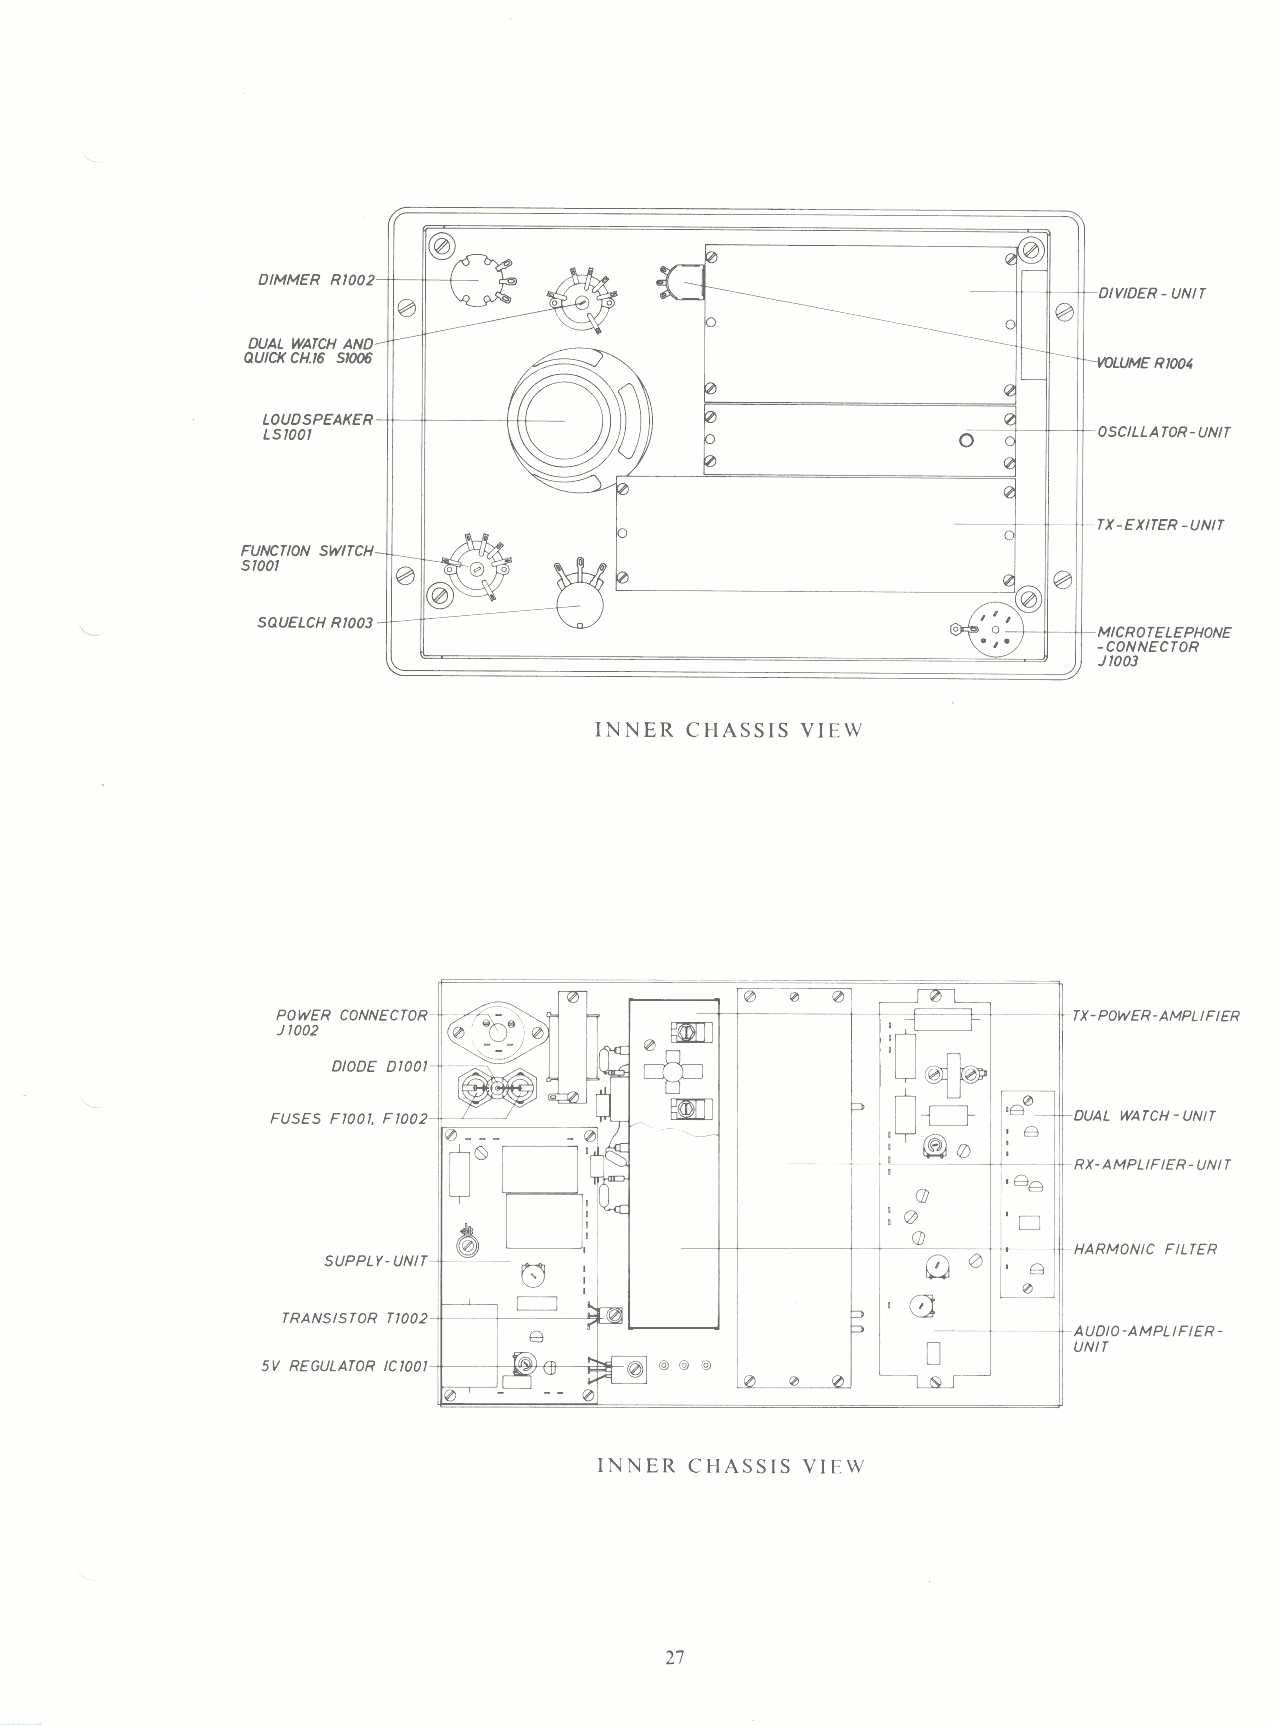 Mechanical layout-2